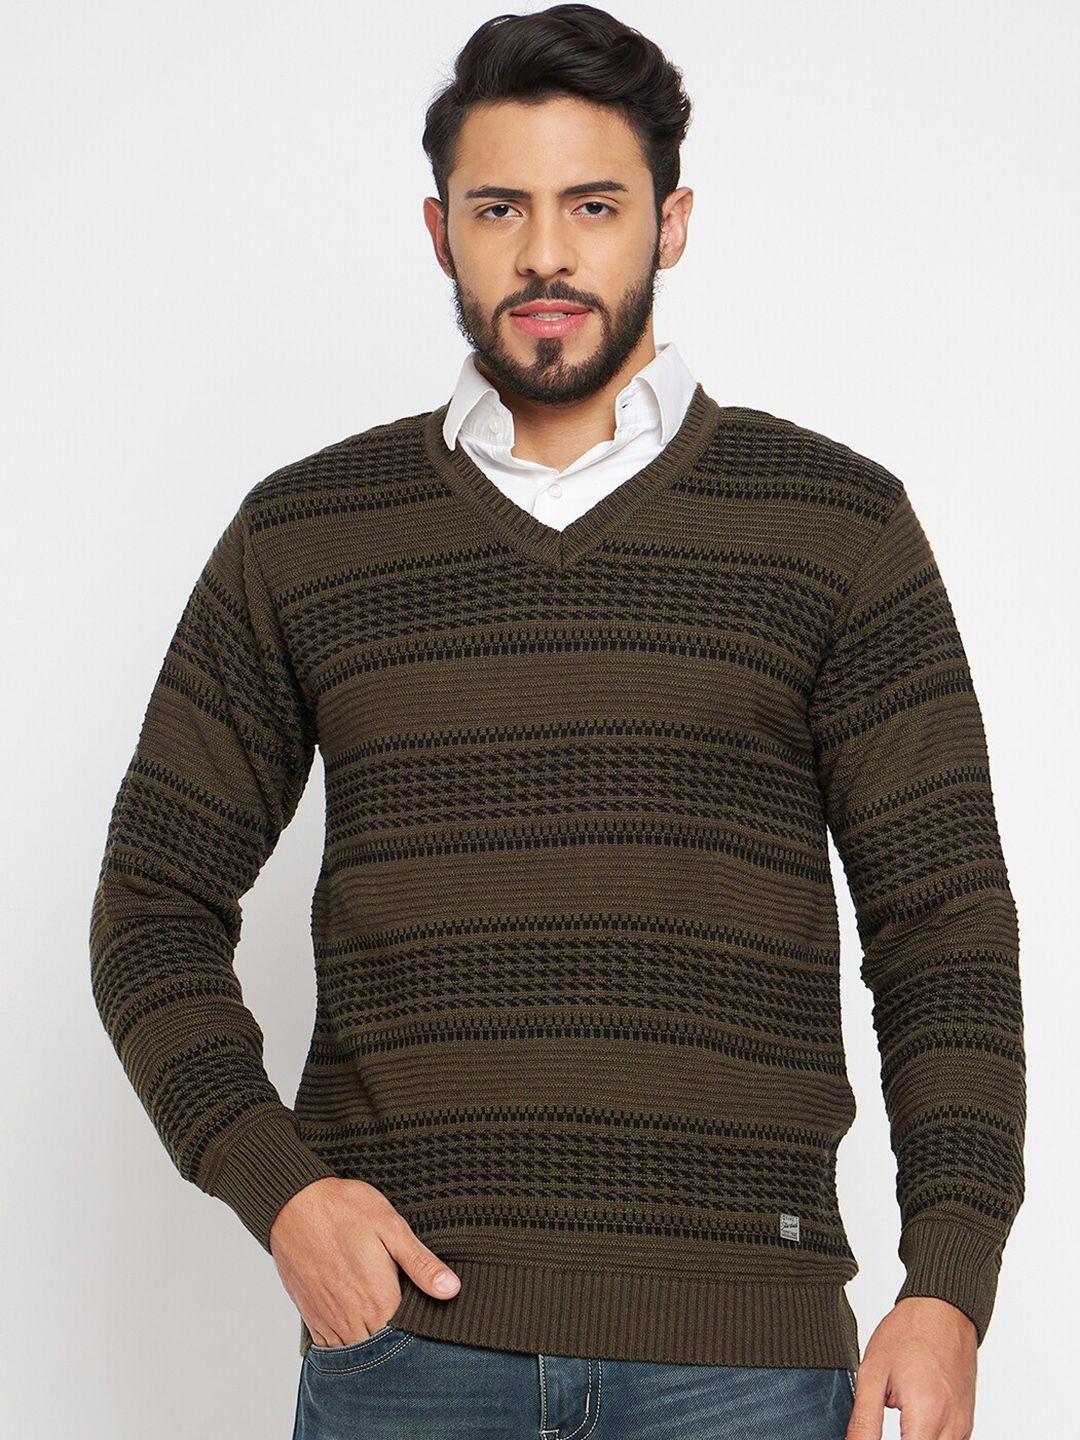 duke-geometric-printed-v-neck-long-sleeves-acrylic-pullover-sweaters